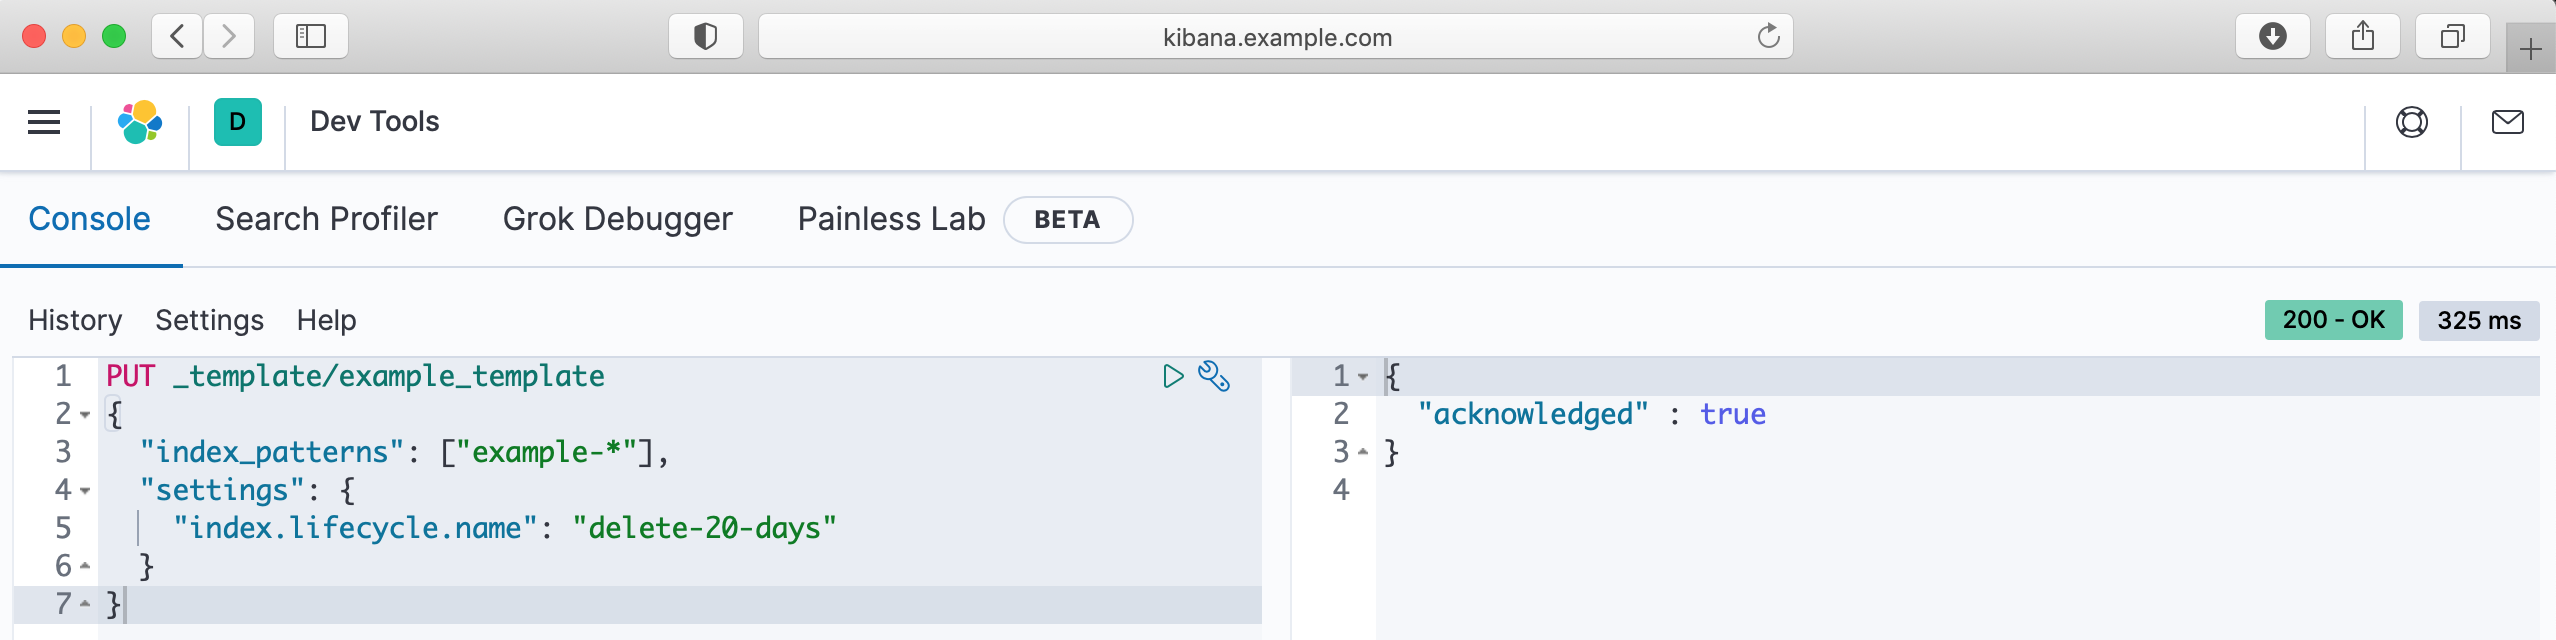 screenshot-kibana-index-template.png